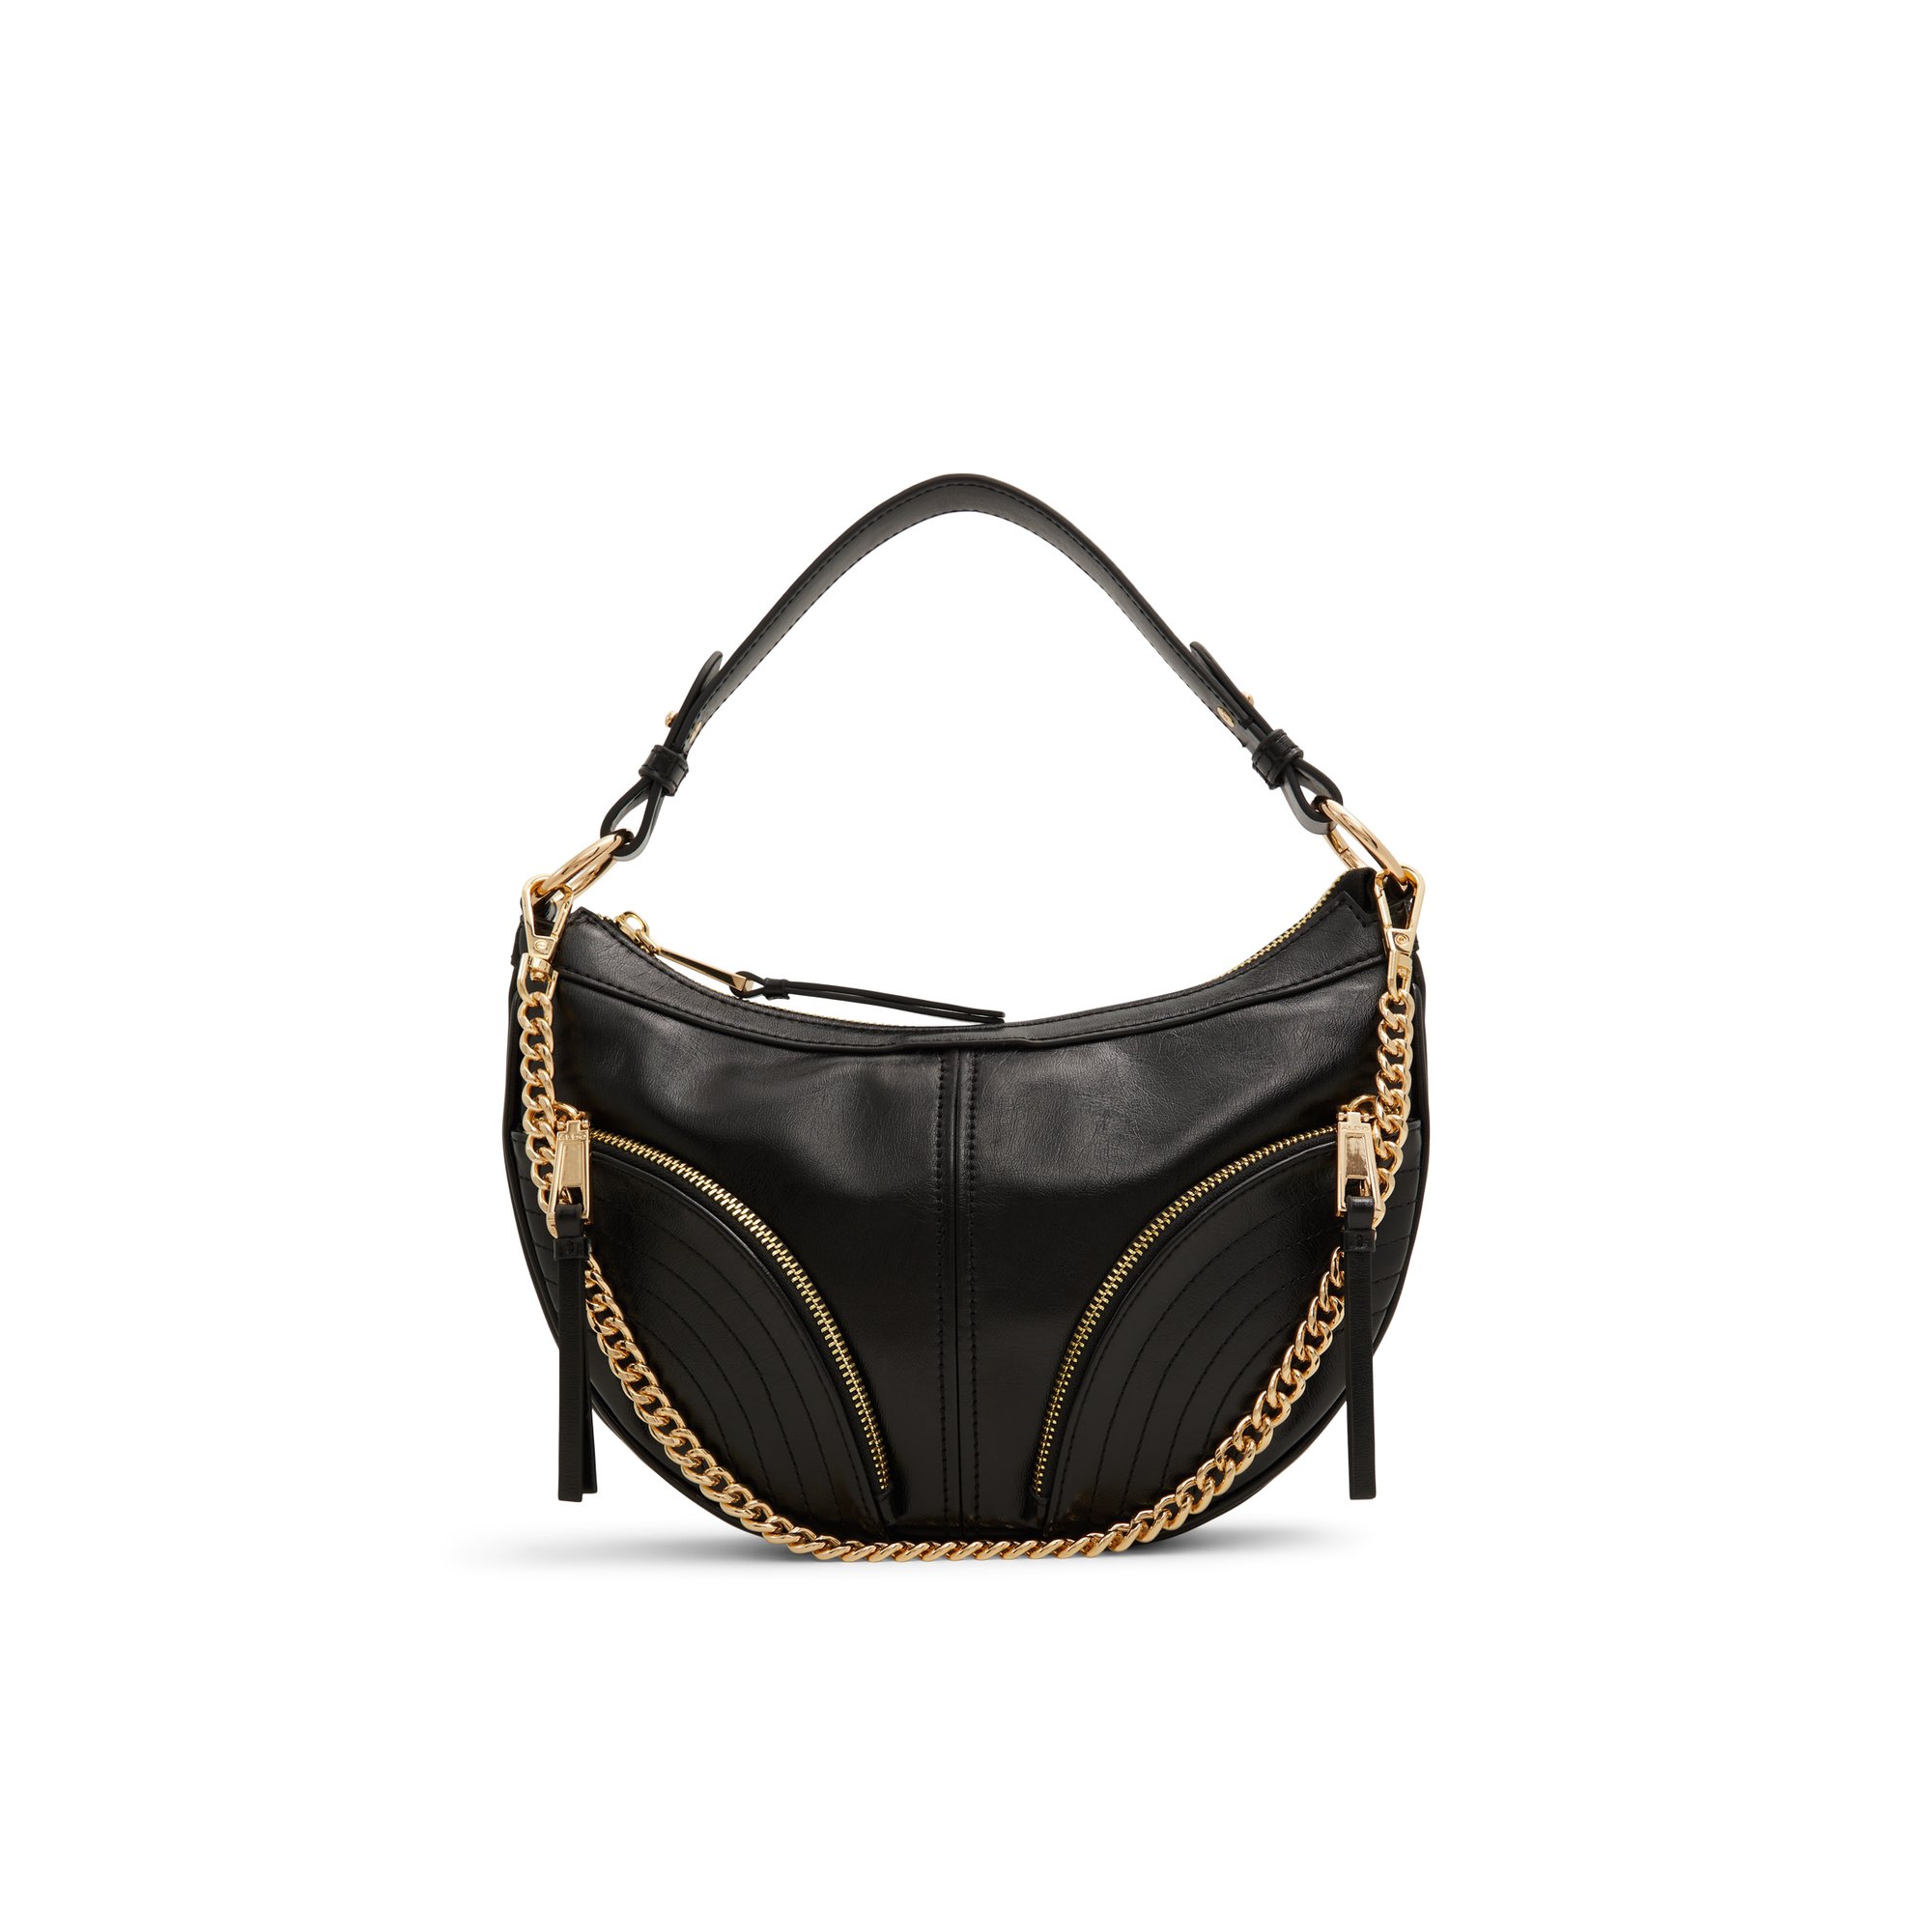 ALDO Beranyx - Women's Handbags Shoulder Bags - Black